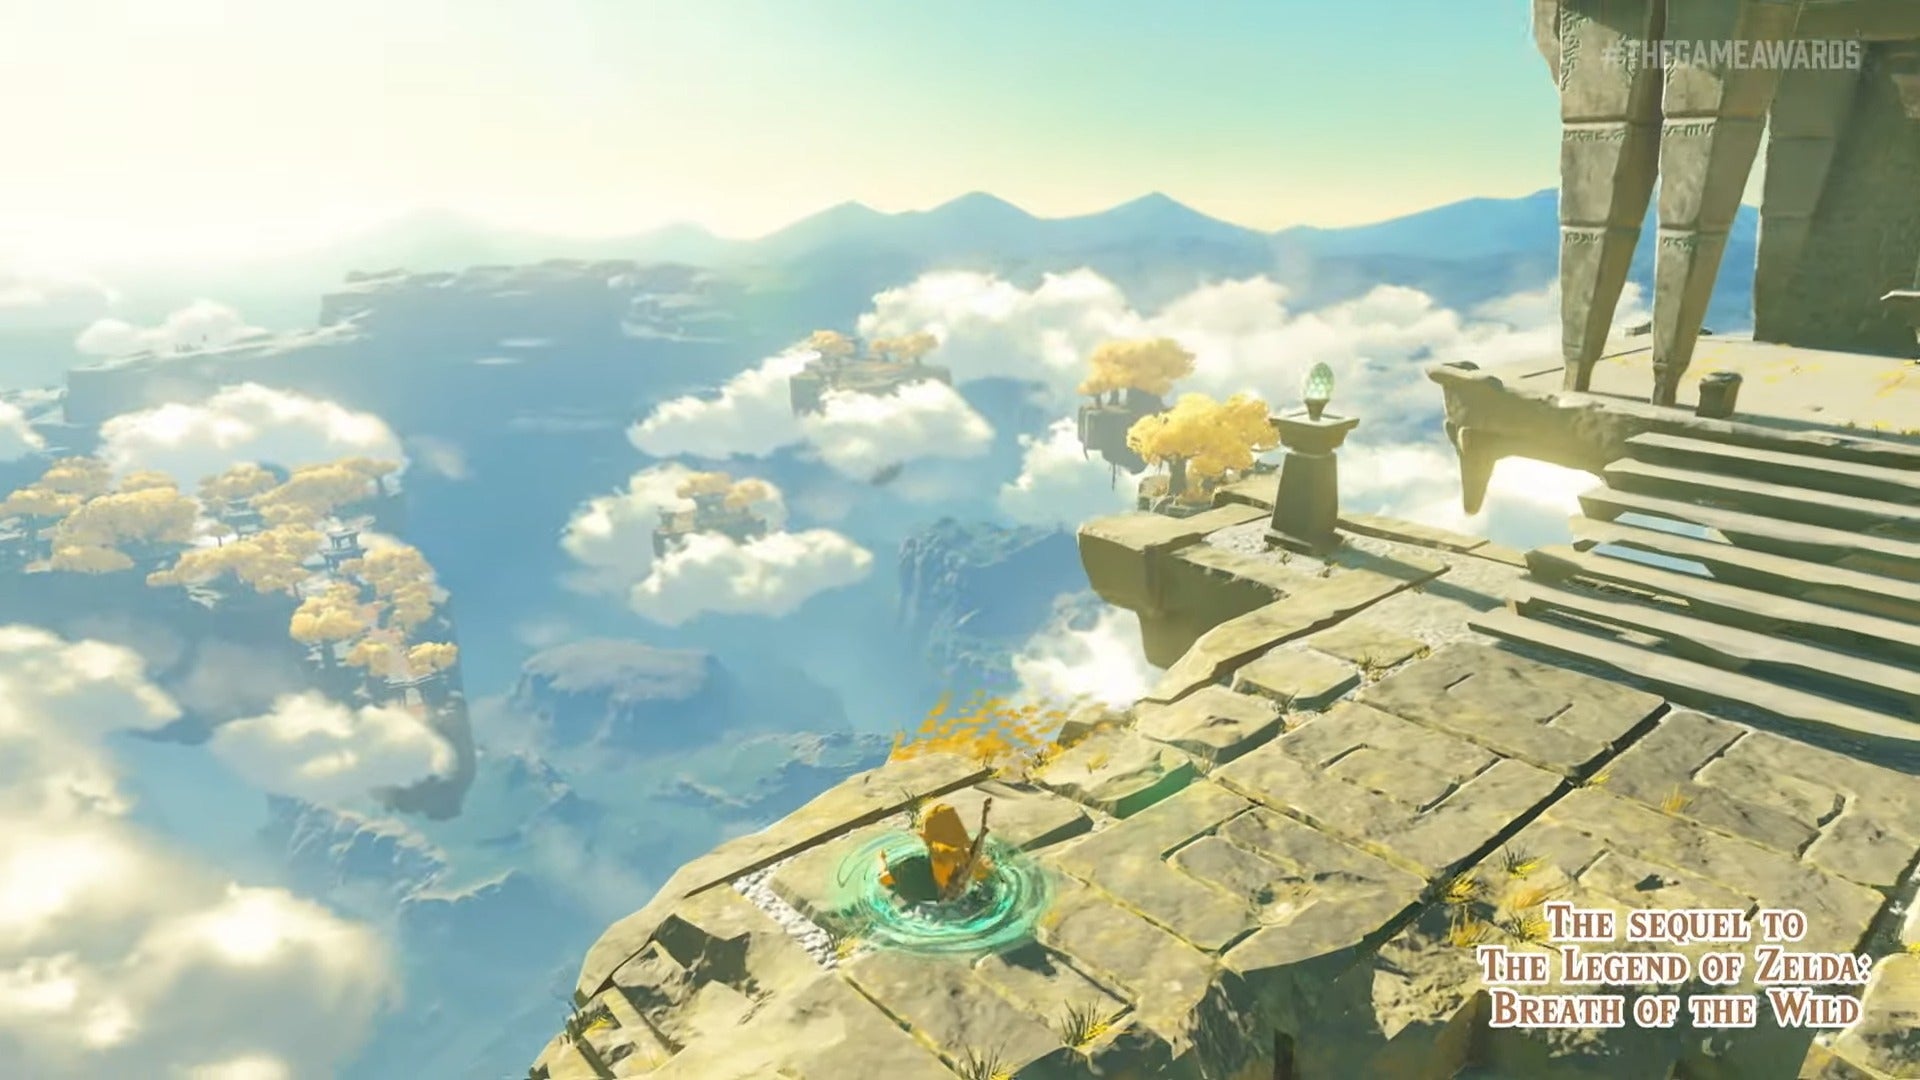 Screenshot: Nintendo / The Game Awards / Kotaku